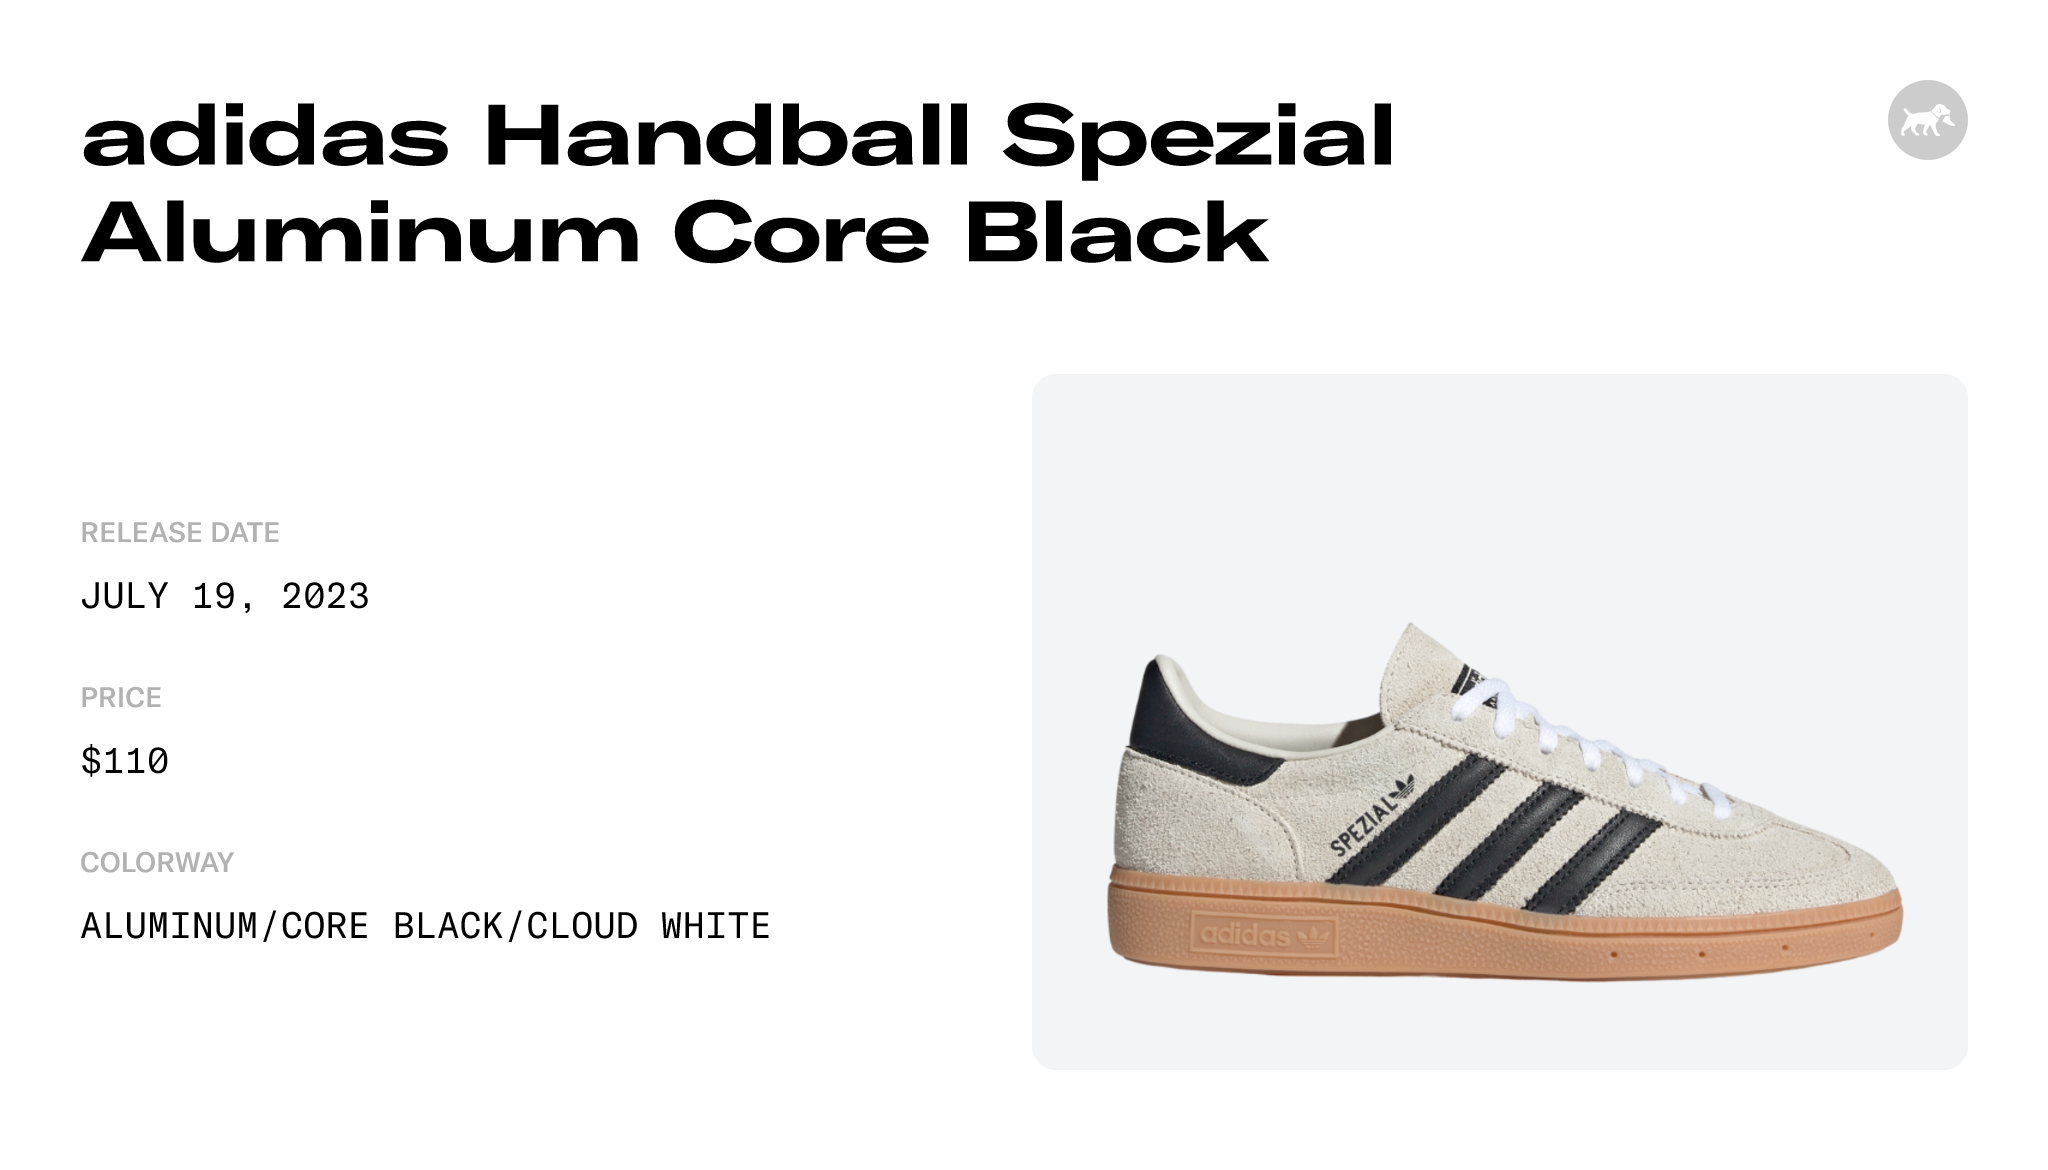 adidas Handball Spezial Aluminum Core Black (Women's) - IF6562 - US